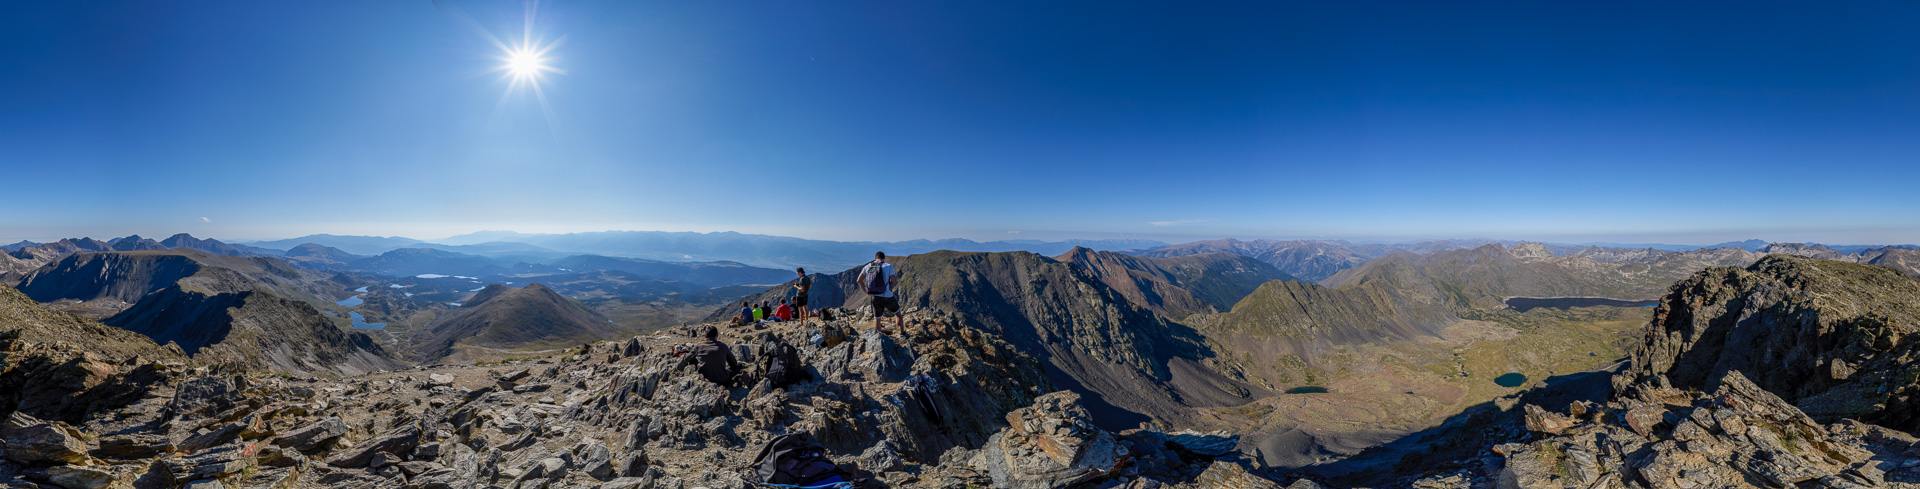 Erster sonniger Pyrenäenberg mit tollem Panorama